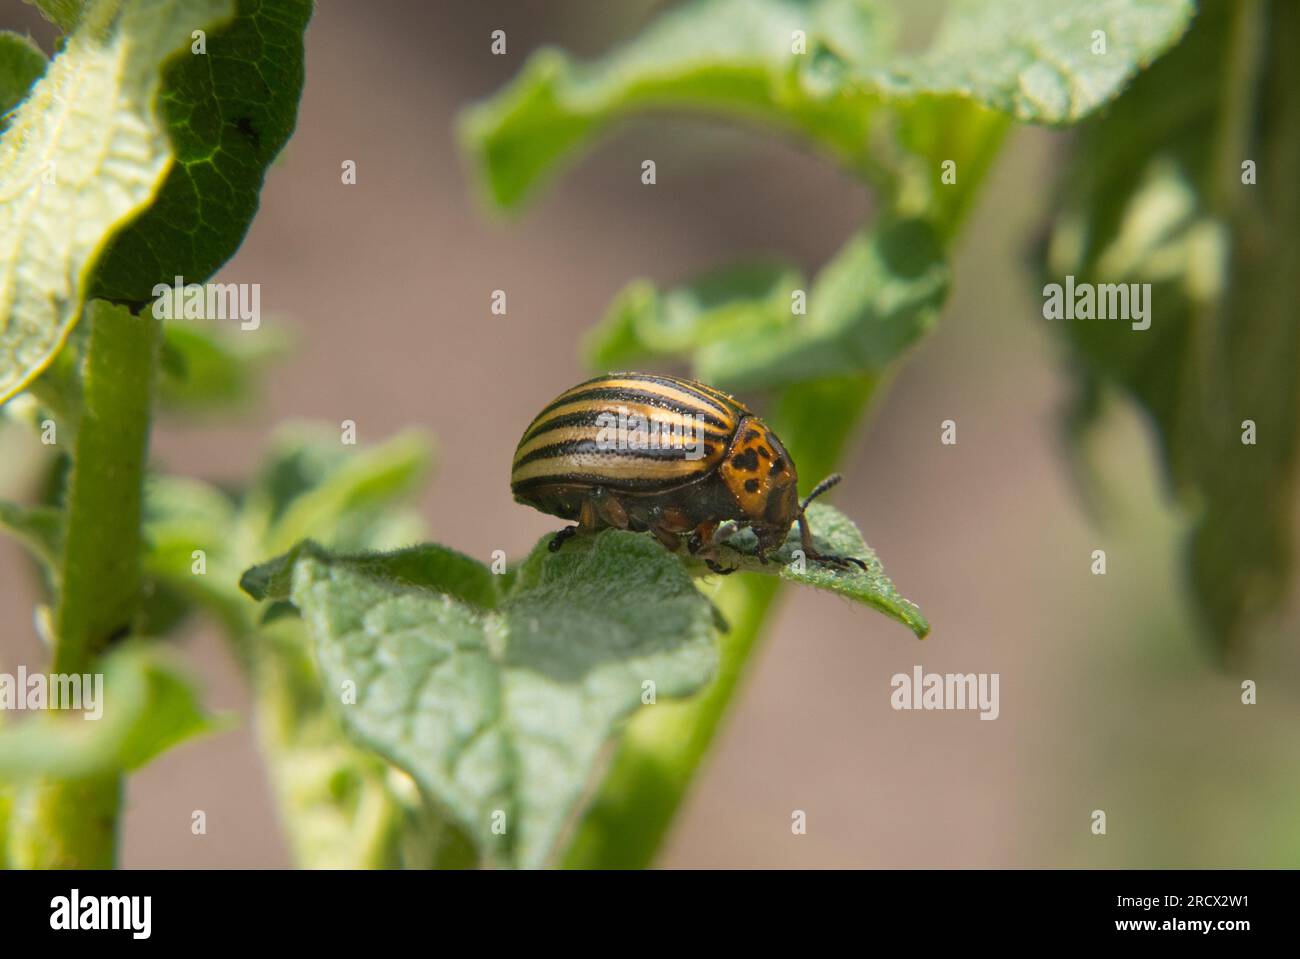 Colorado potato beetle on potato plant: agricultural damage Stock Photo